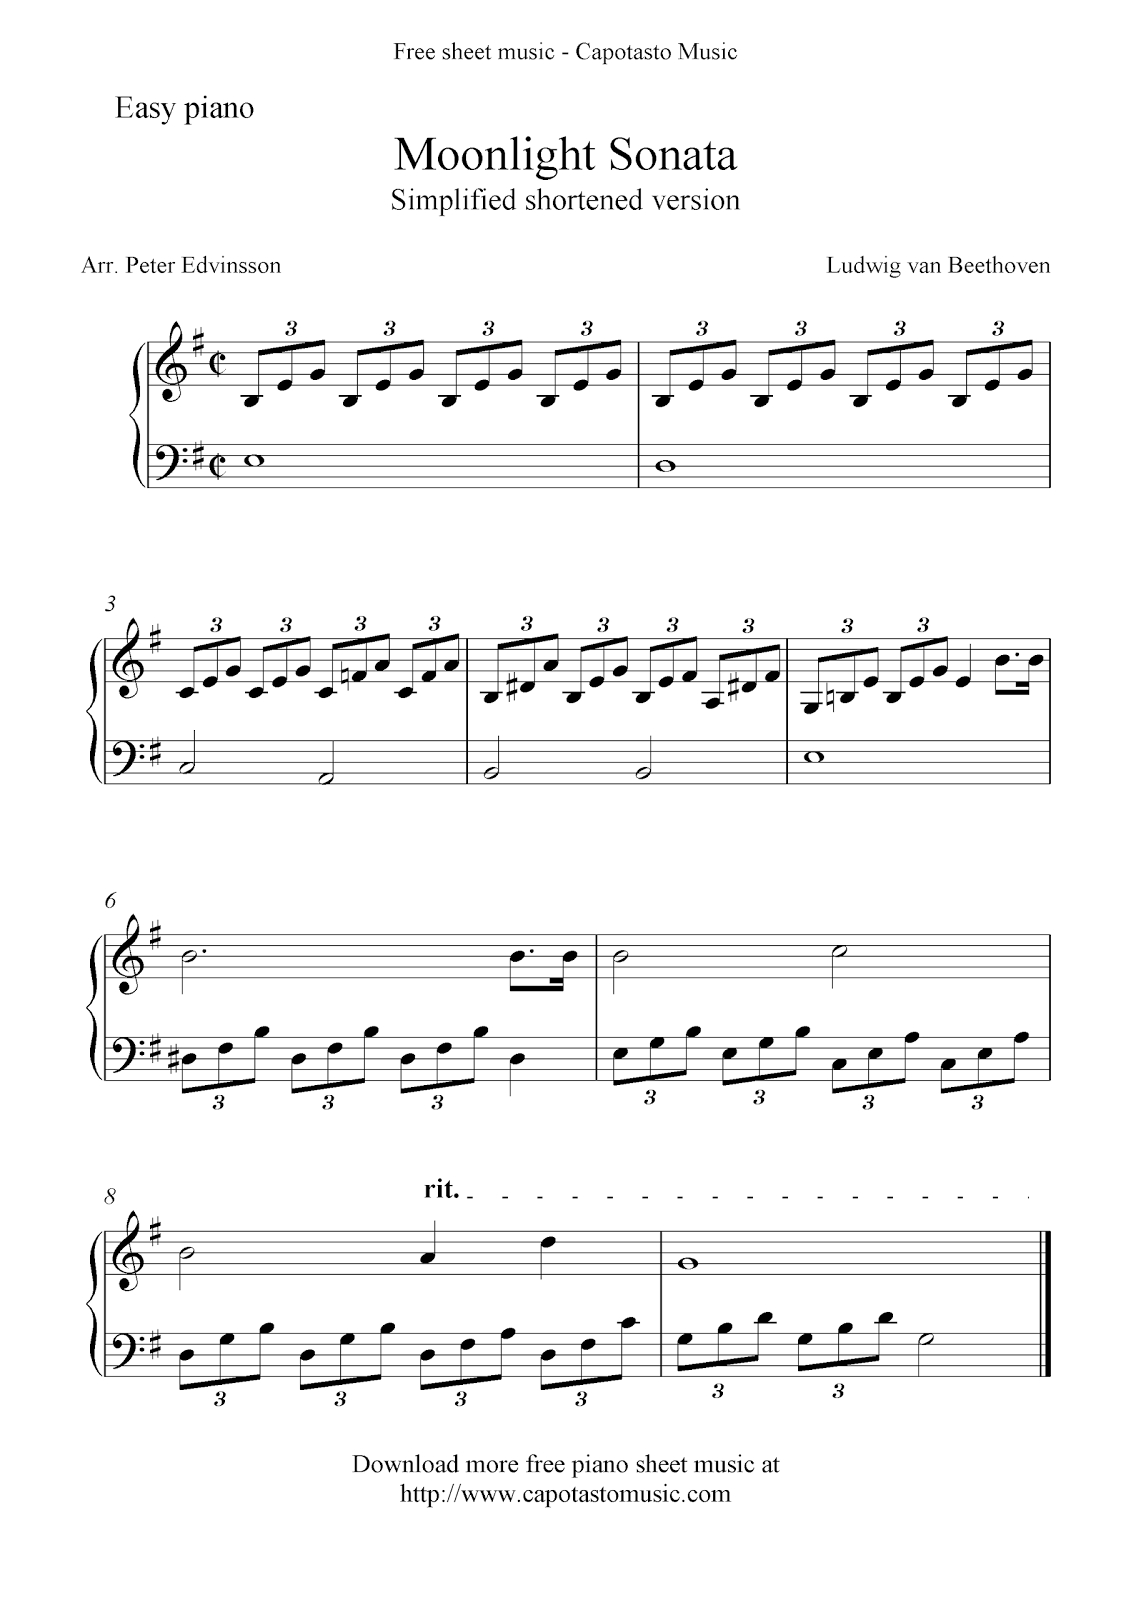 Free Sheet Music Scores: Free Easy Piano Sheet Music, Moonlight - Free Printable Piano Pieces